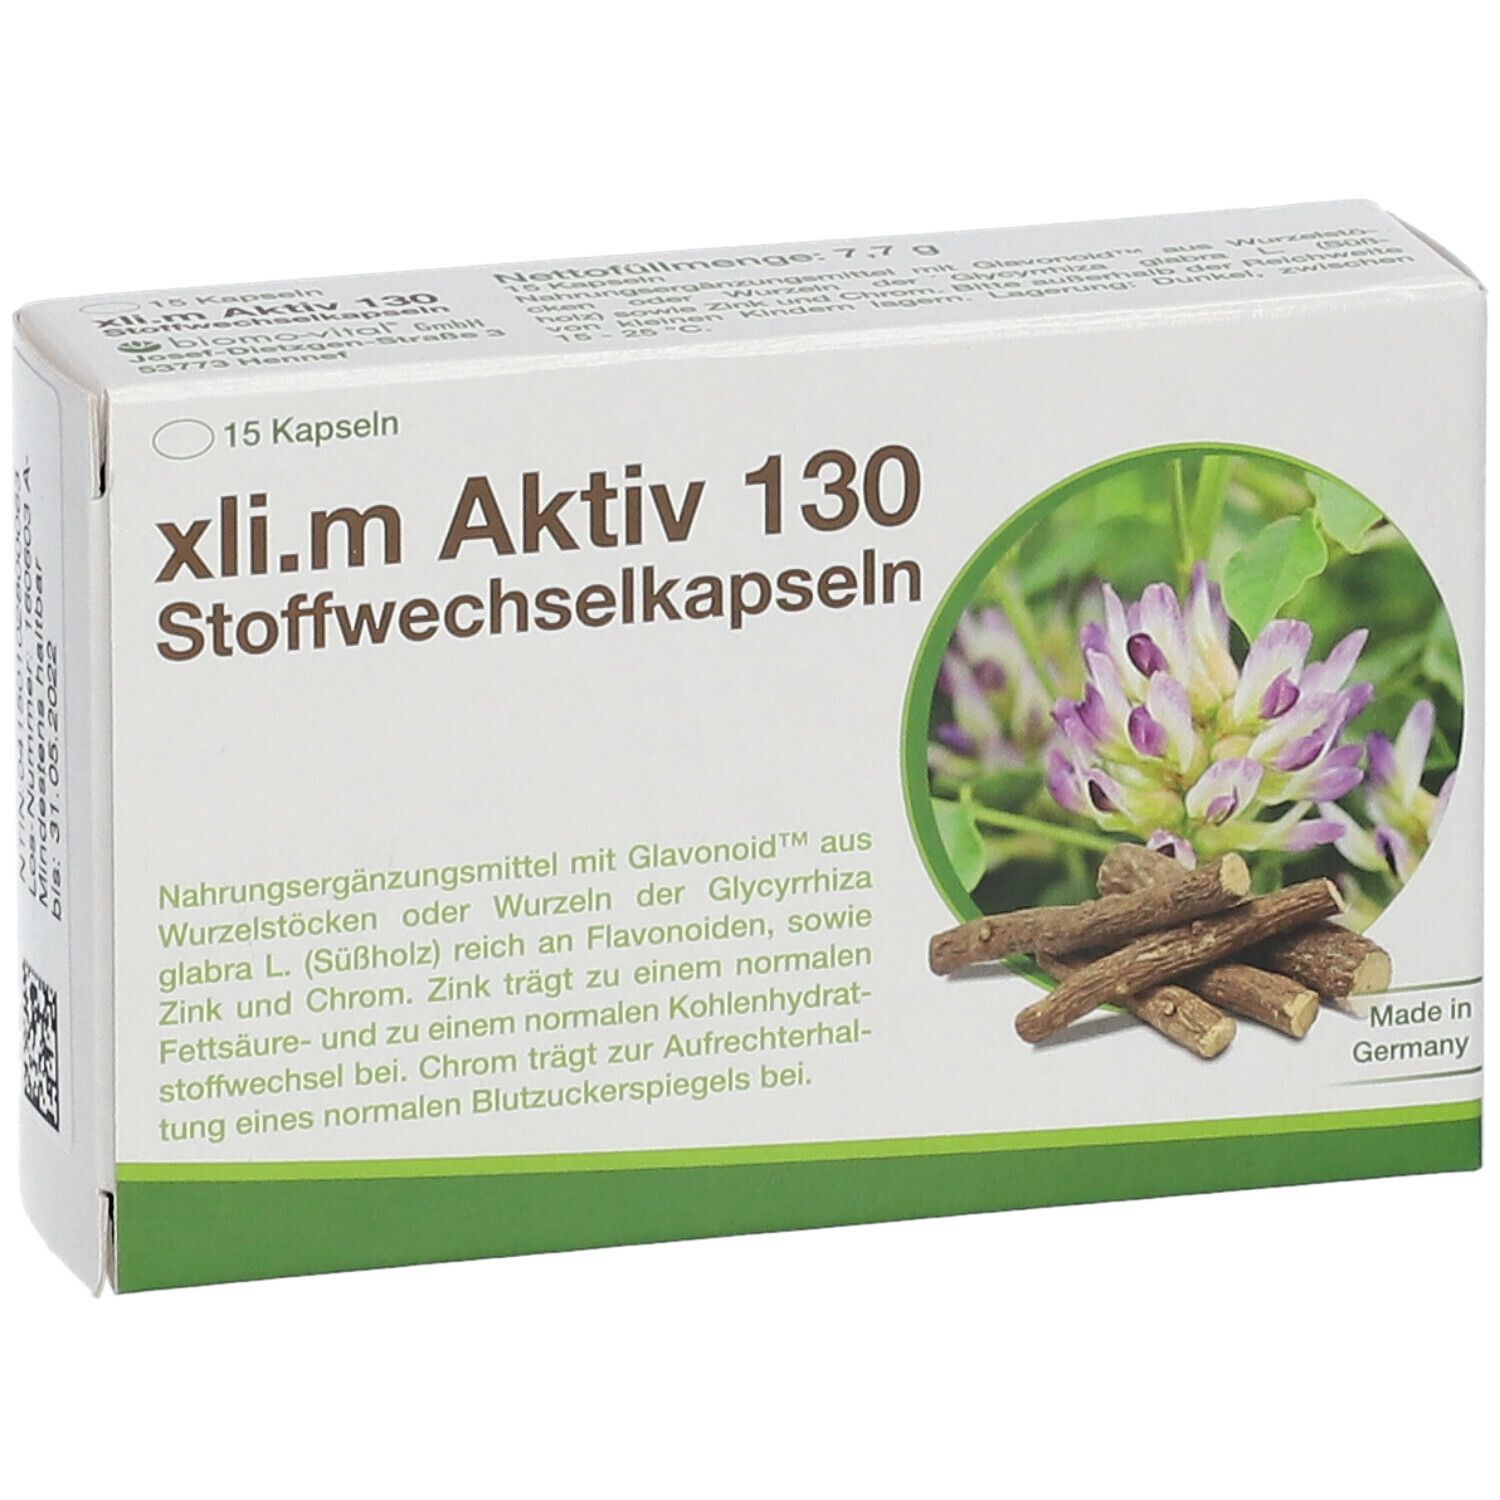 xlim® Aktiv 130 Stoffwechselkapseln